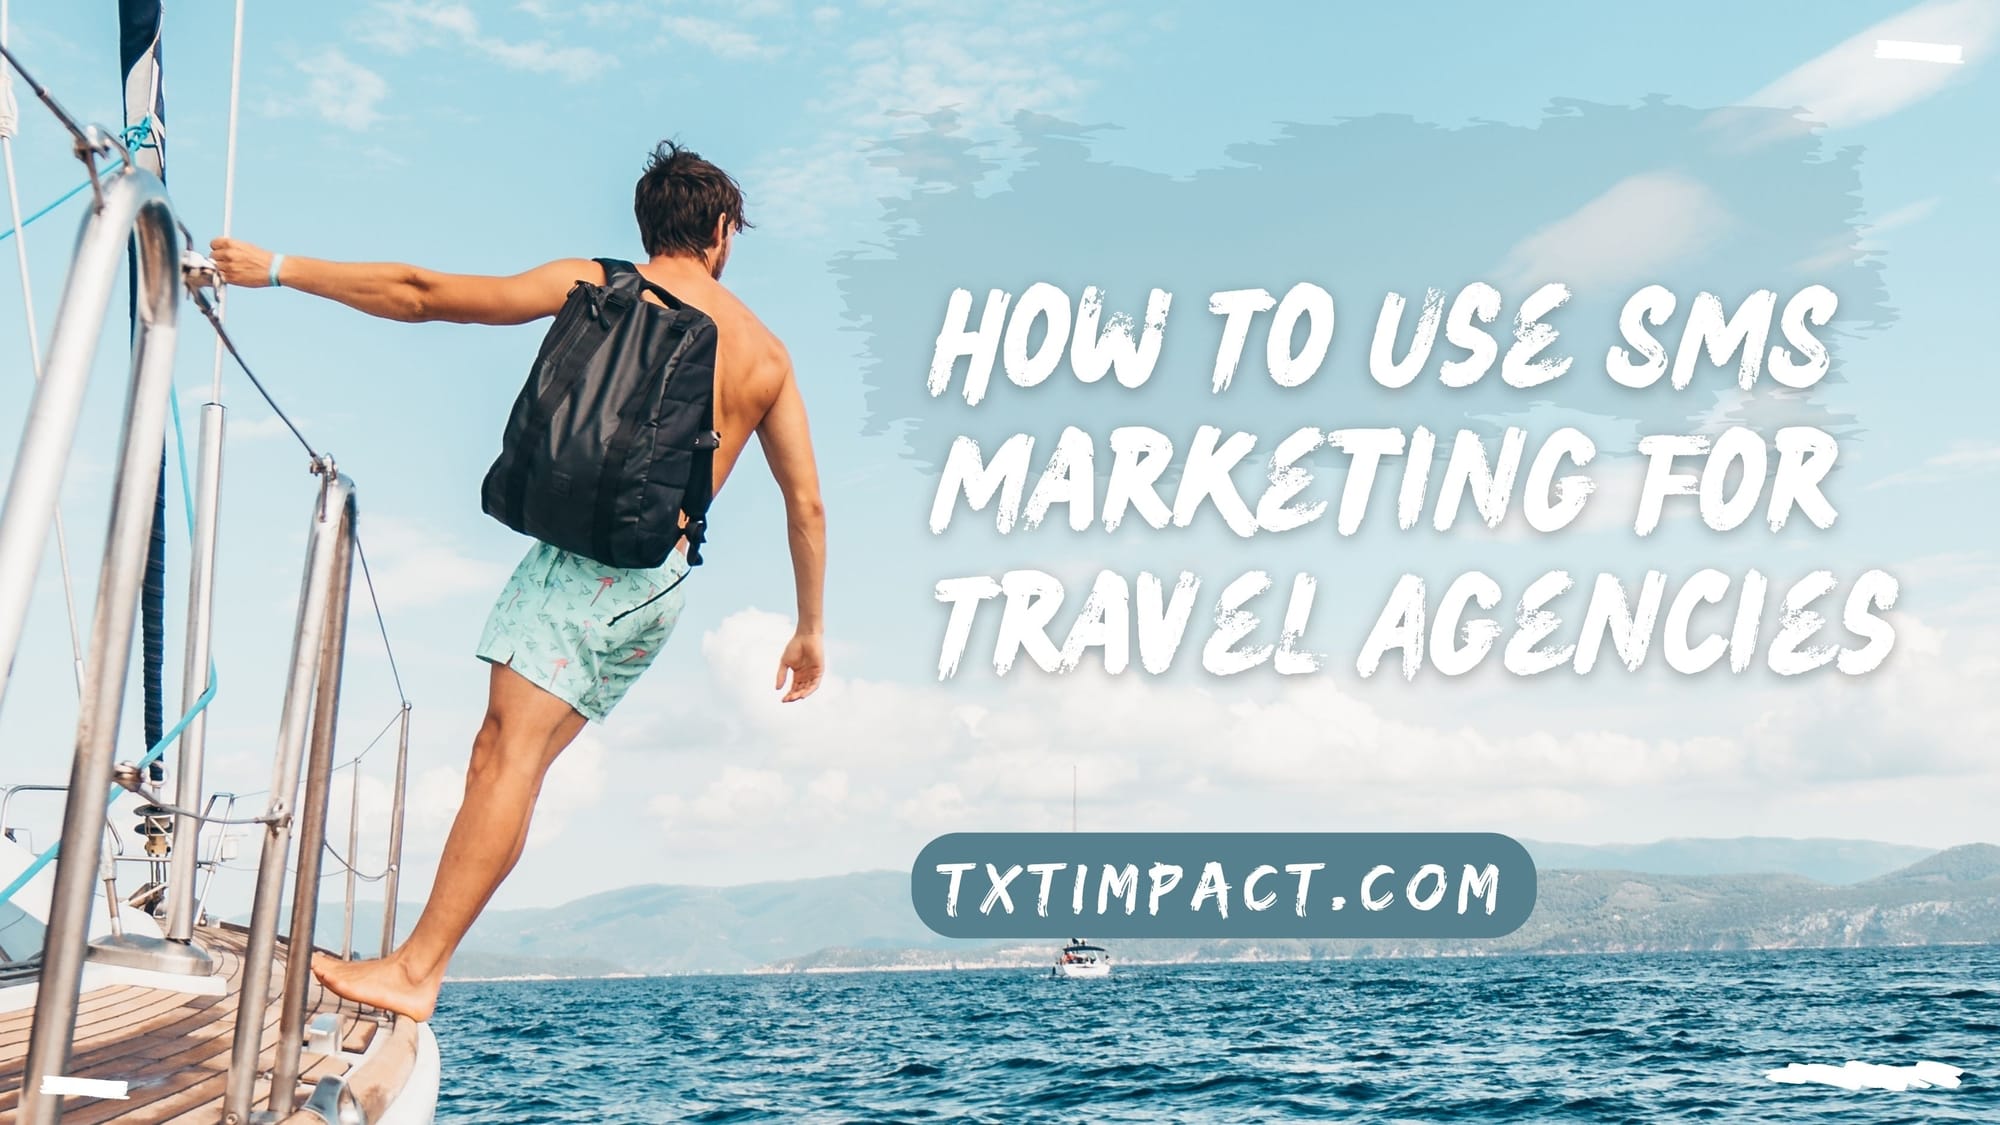 SMS Marketing For Travel Agencies.jpg